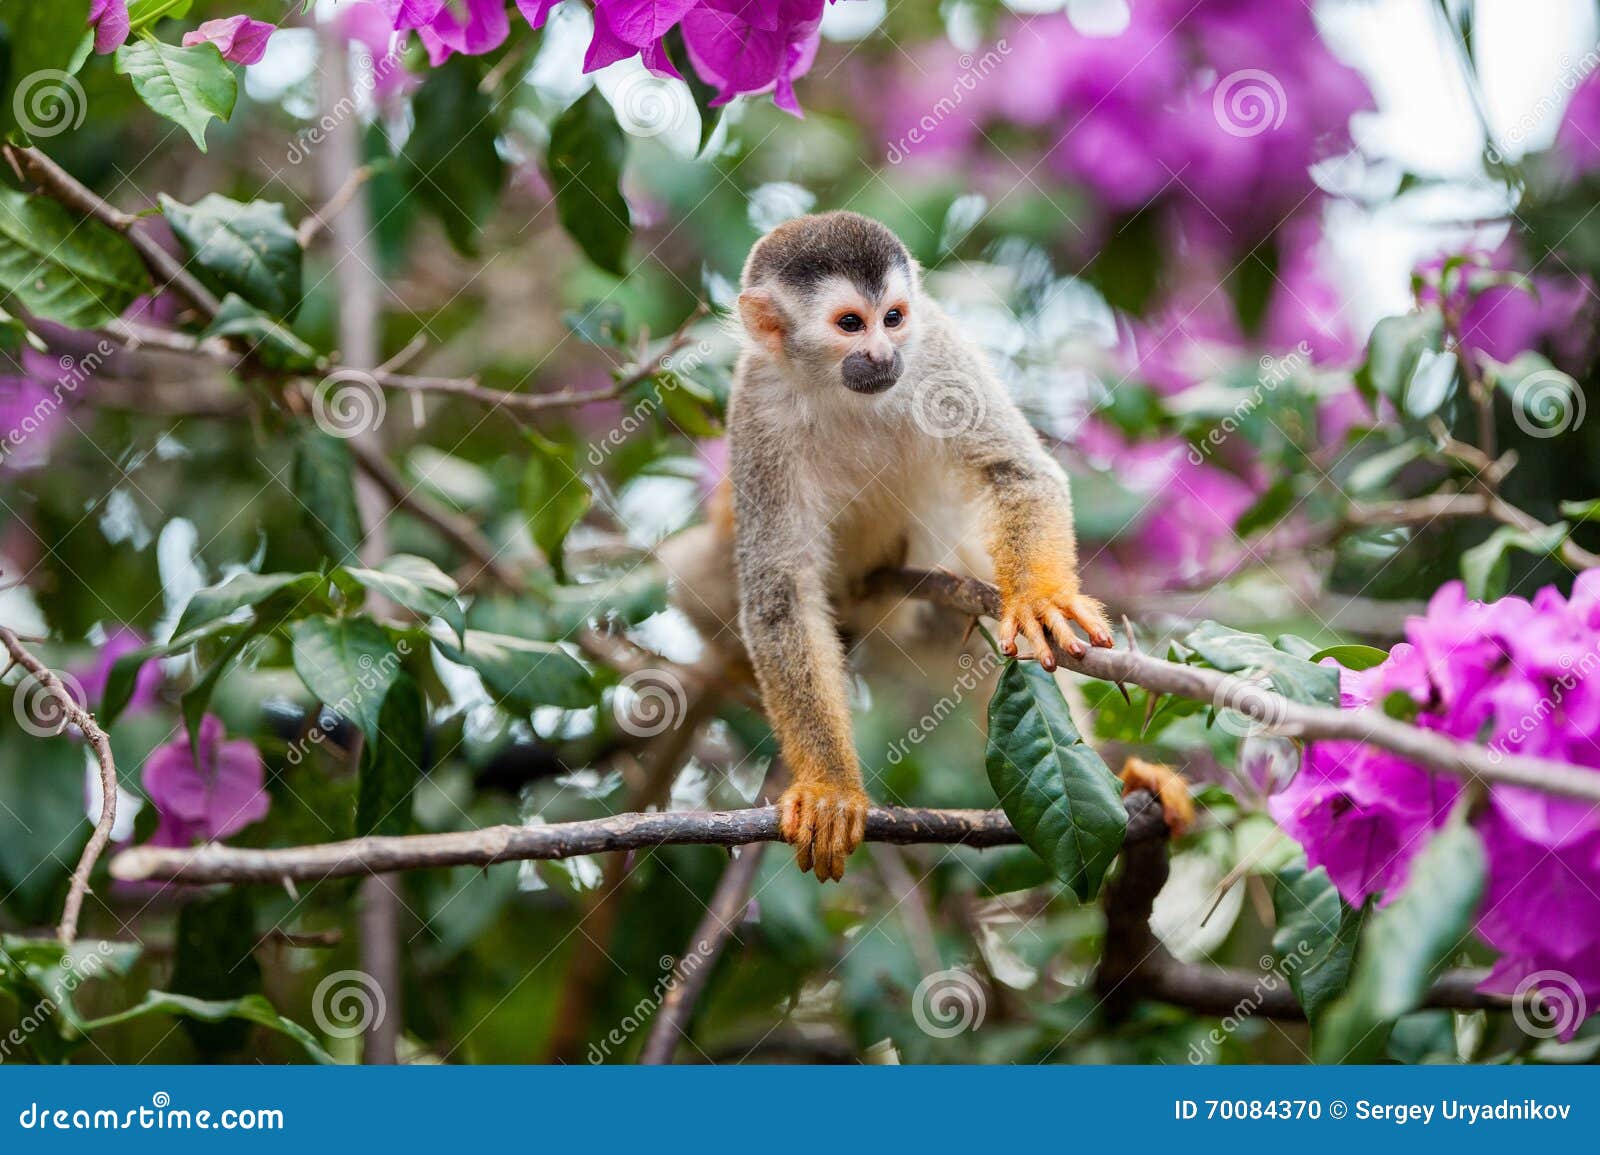 the squirrel monkey and pink flowers. the common squirrel monkey (saimiri sciureus)